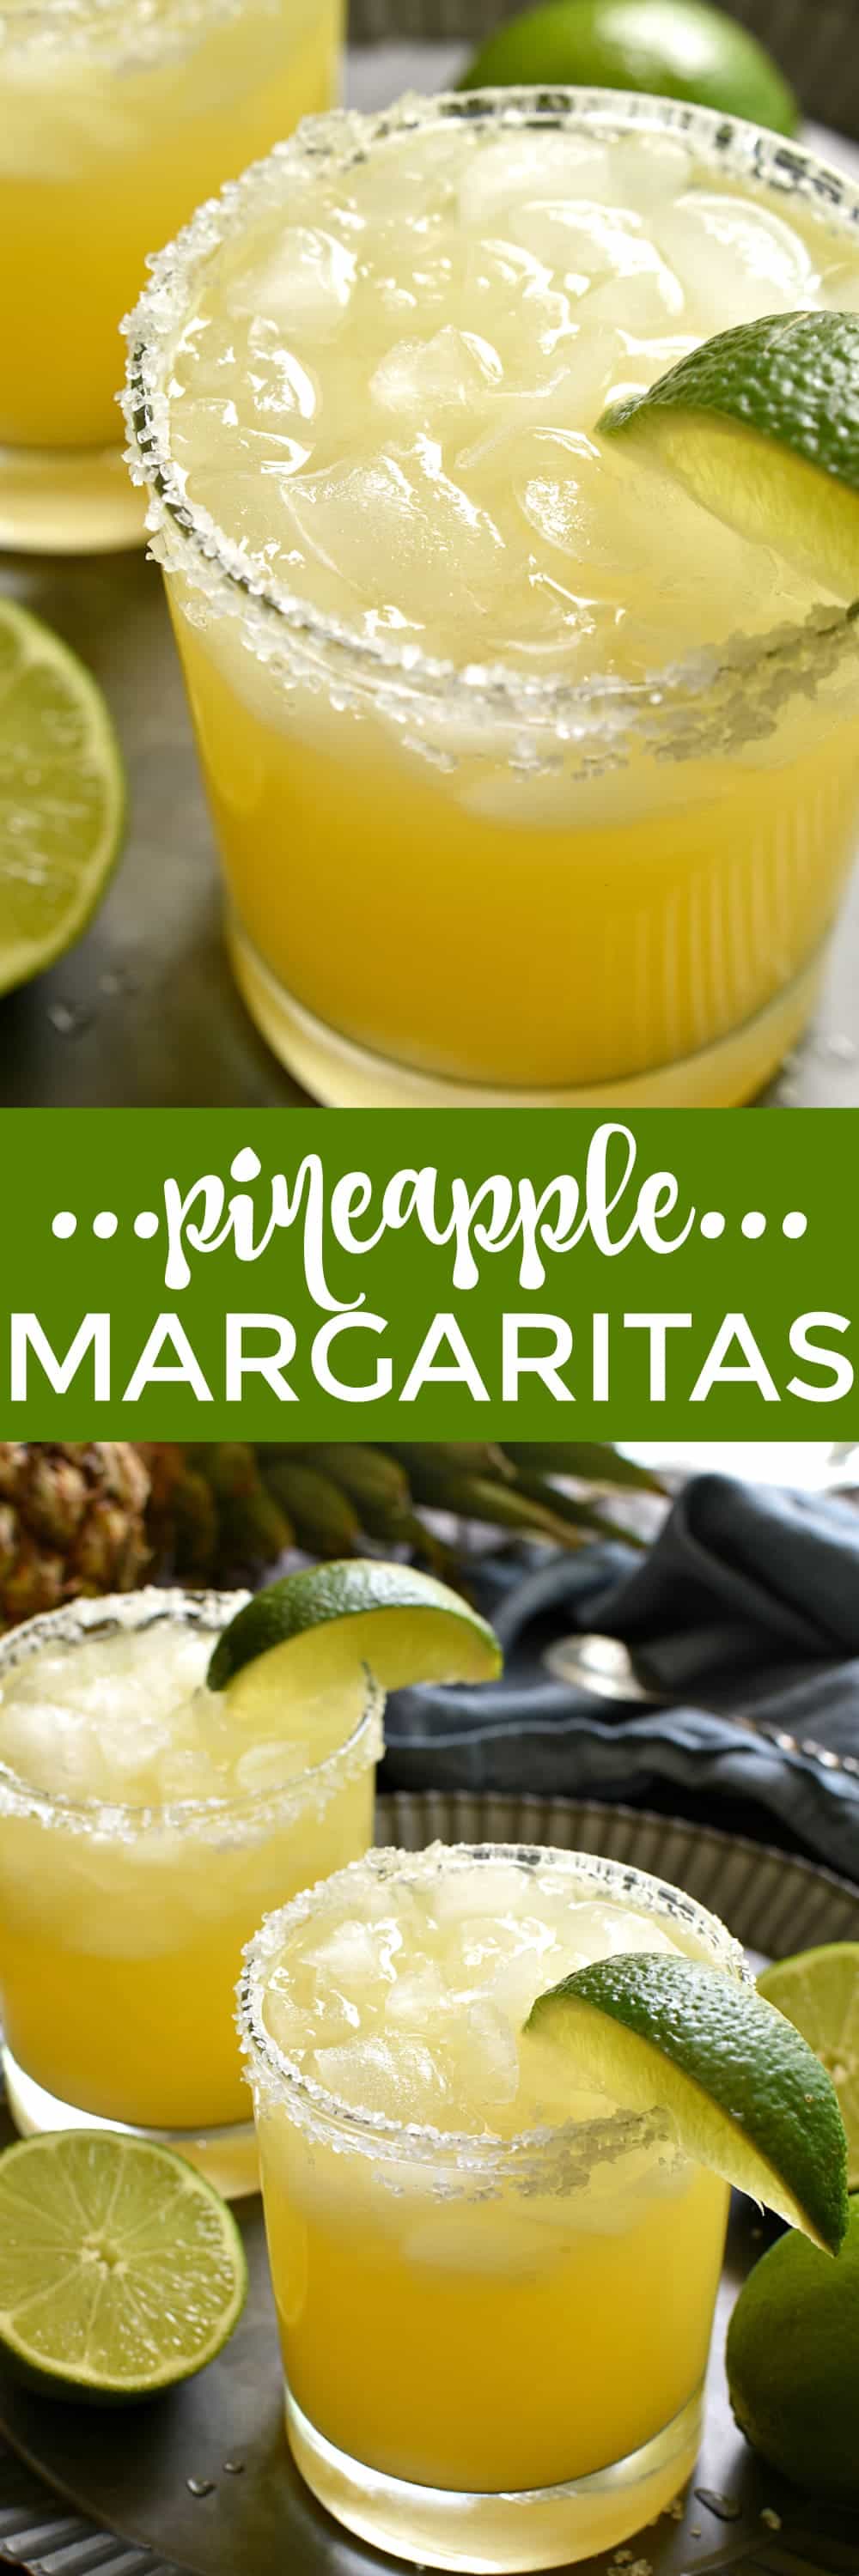 Disse Ananas Margaritas er en deilig søt, forfriskende vri på originalen! Laget med bare 4 enkle ingredienser og perfekt for happy hour, helger,og hele sommeren!